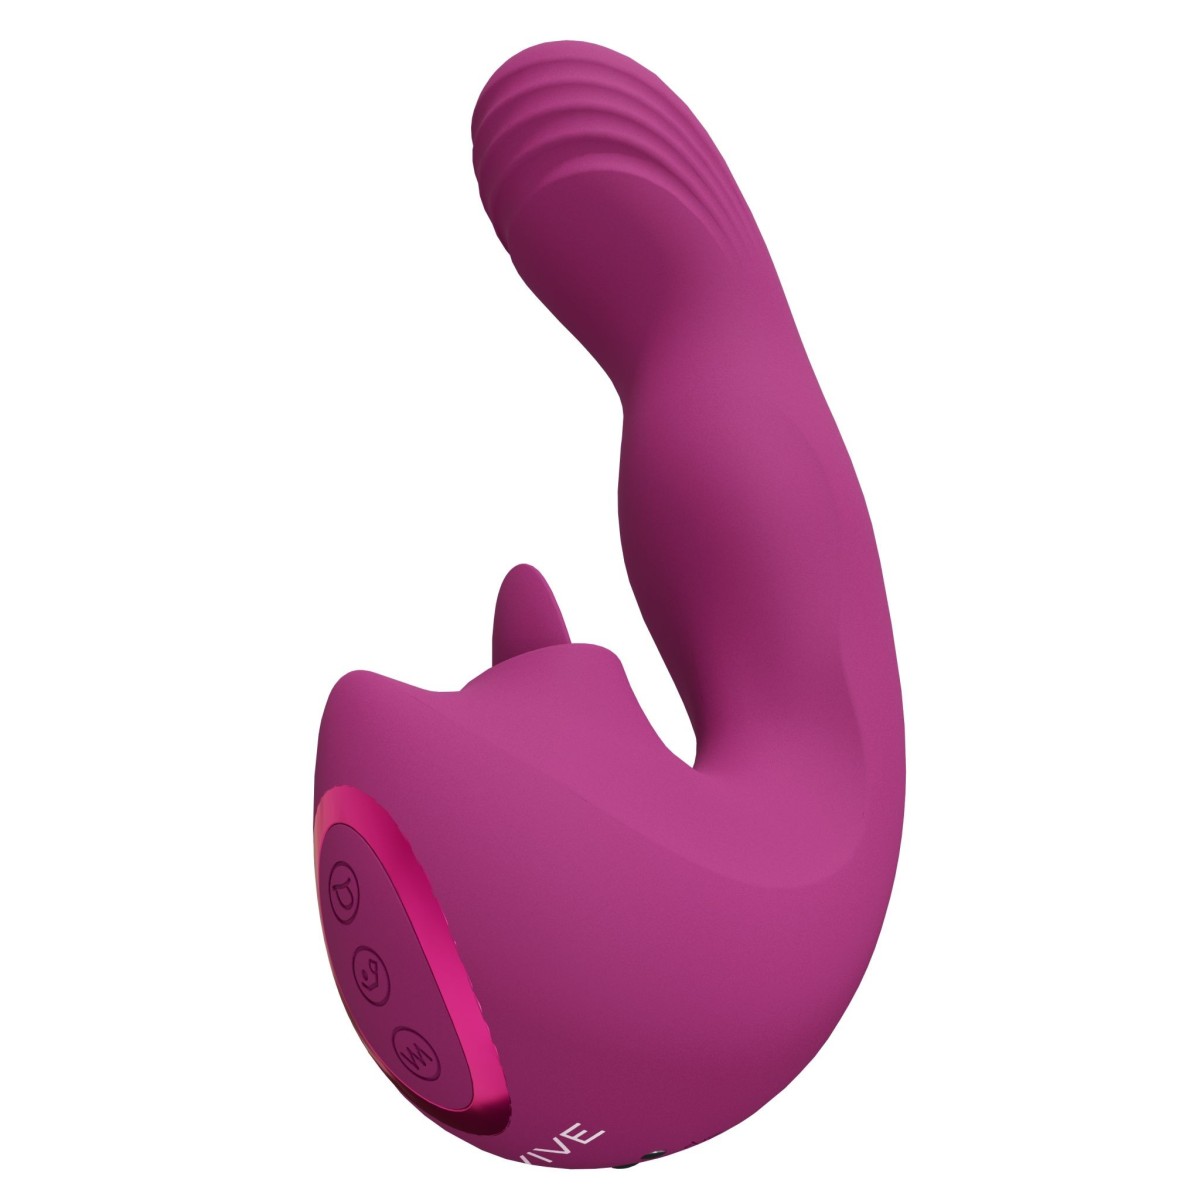 Multifunkčný vibrátor Vive Yumi ružový, silikónový vibrátor s pohyblivou hlavou a jazykom 16 x 3,5 cm